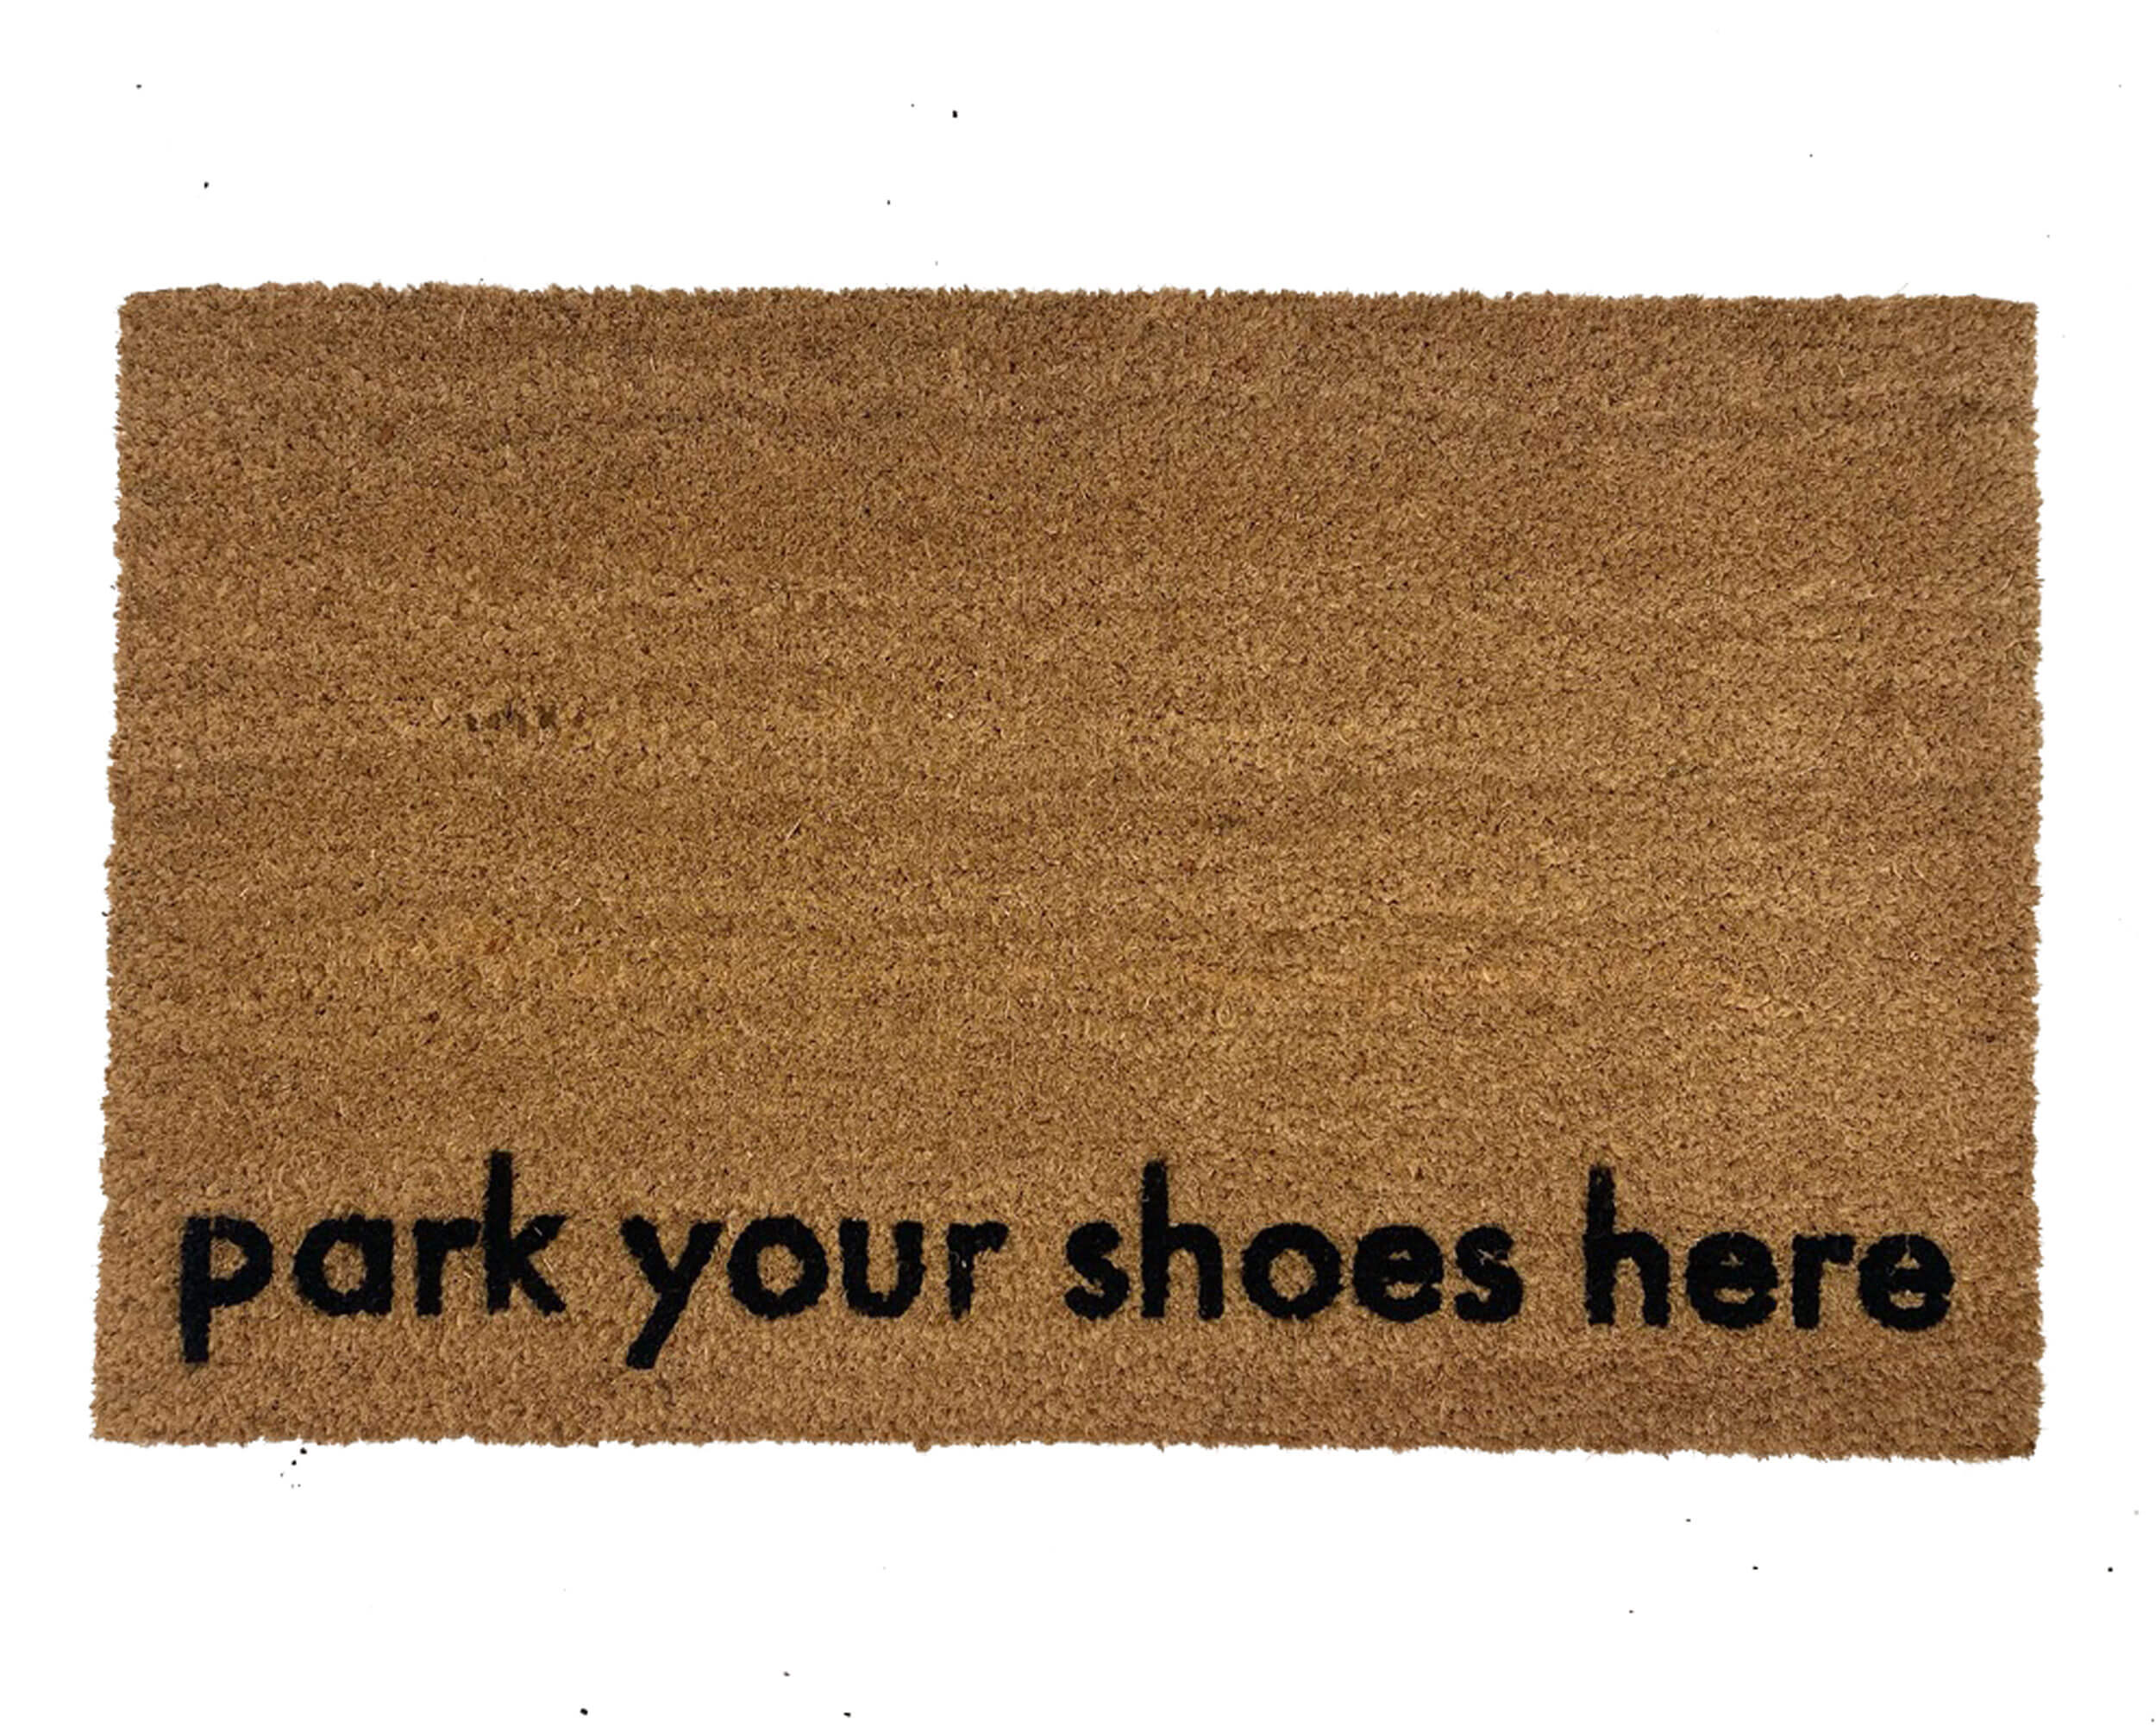 https://www.damngooddoormats.com/sites/damngooddoormats.indiemade.com/files/park-your-shoes-here-shoes-off-clean-house-welcome-mat-outdoor-coir-damn-good-doormats.jpg